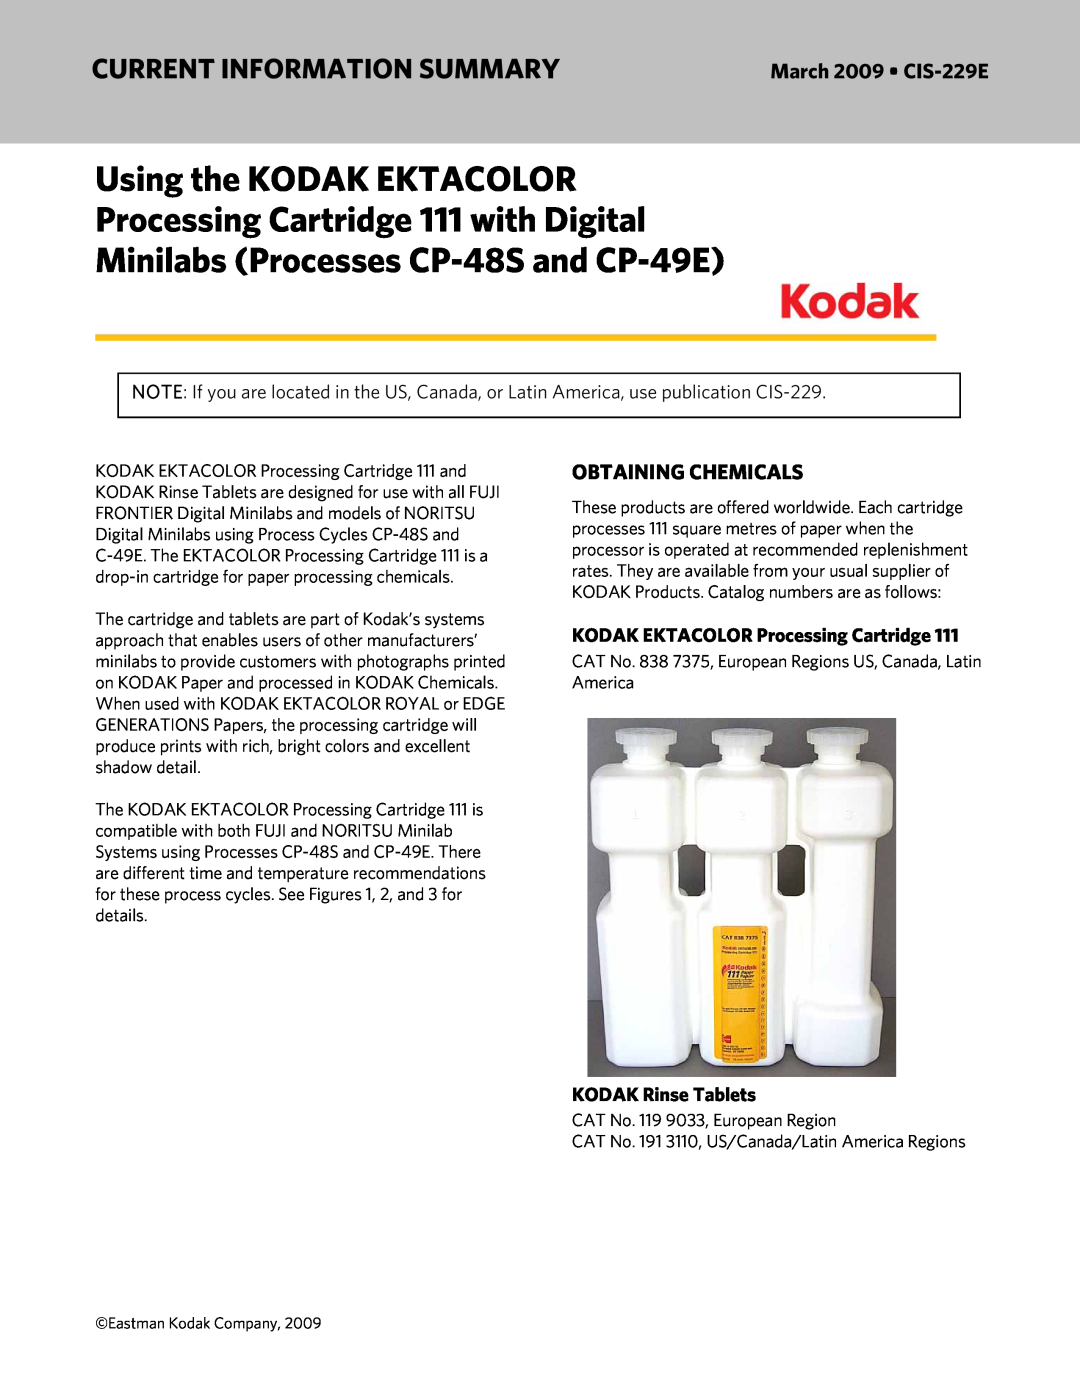 Kodak CP-48S manual March 2009 CIS-229E, Obtaining Chemicals, KODAK EKTACOLOR Processing Cartridge, KODAK Rinse Tablets 